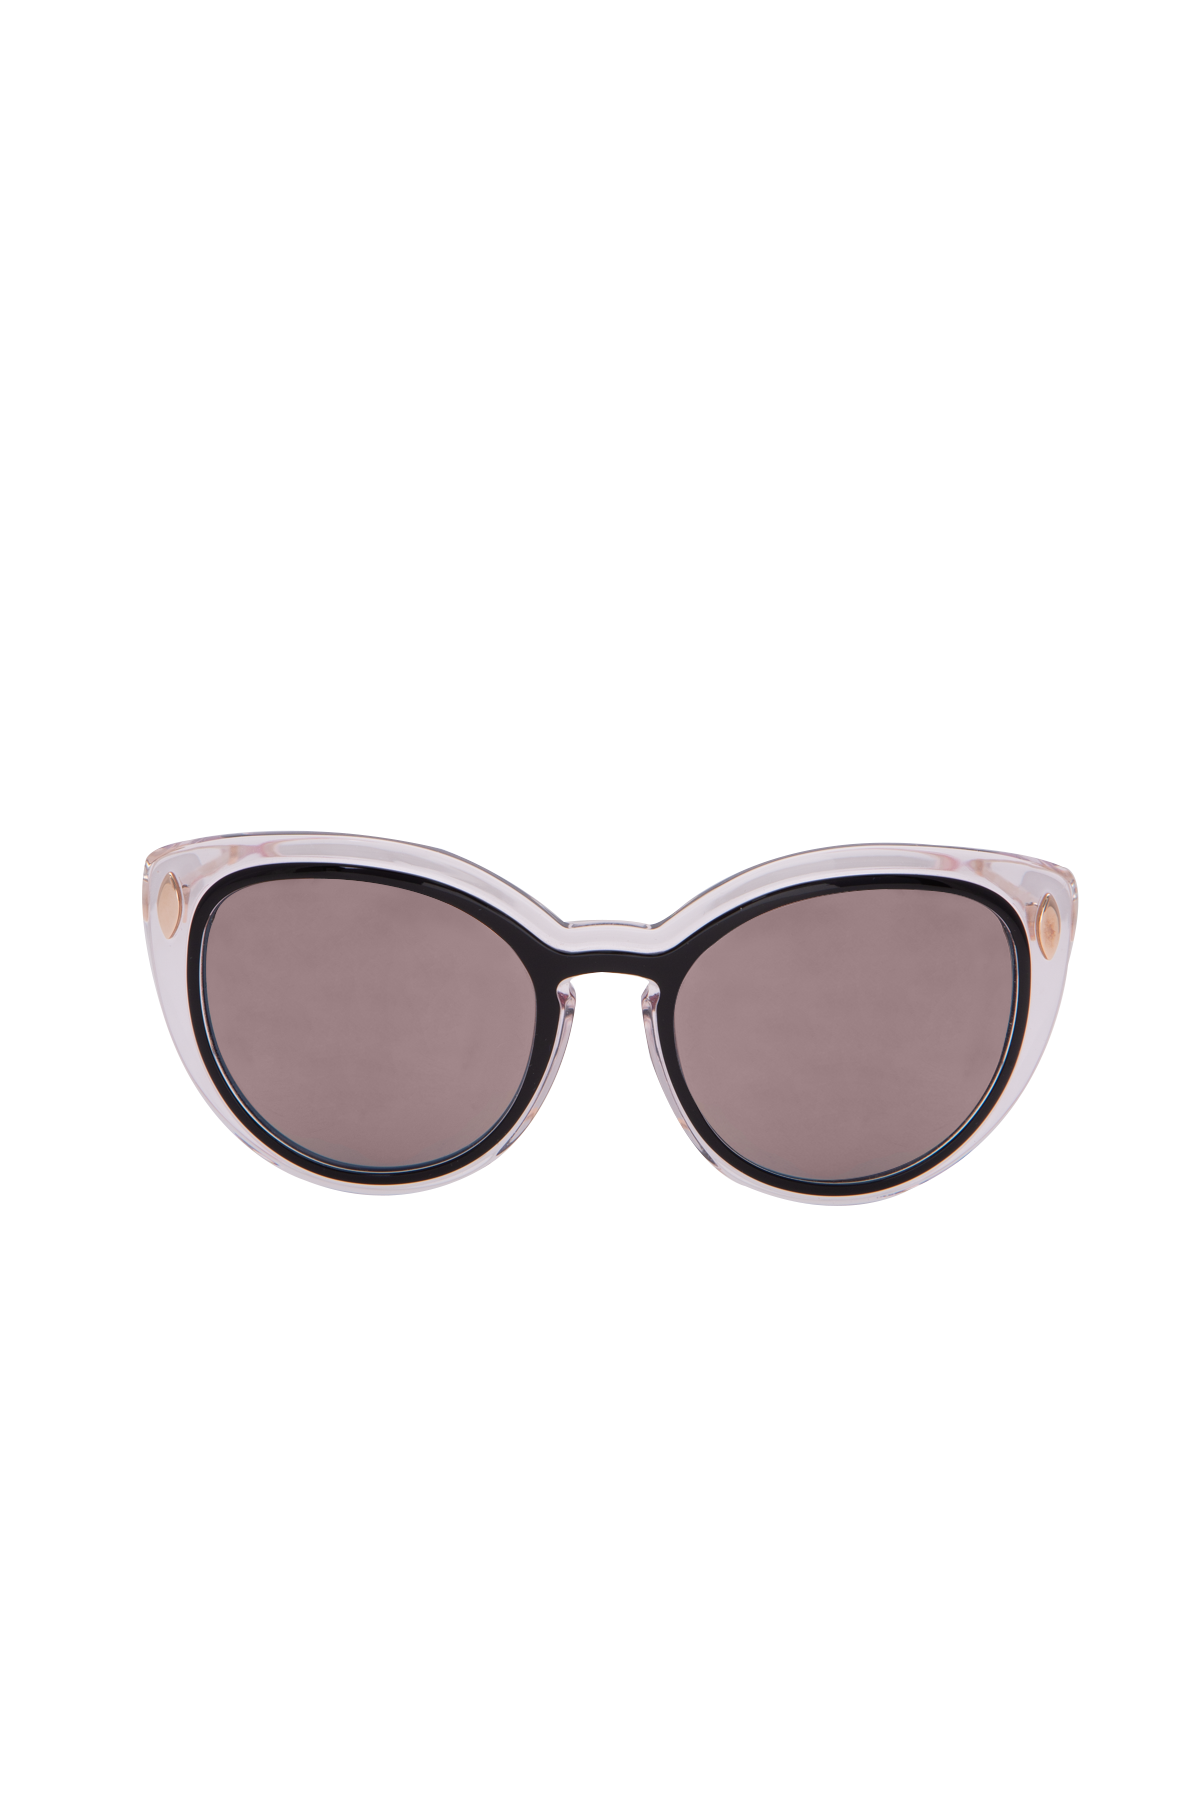 Louis Vuitton Authentic My Monogram Light Cat Eye Sunglasses Black